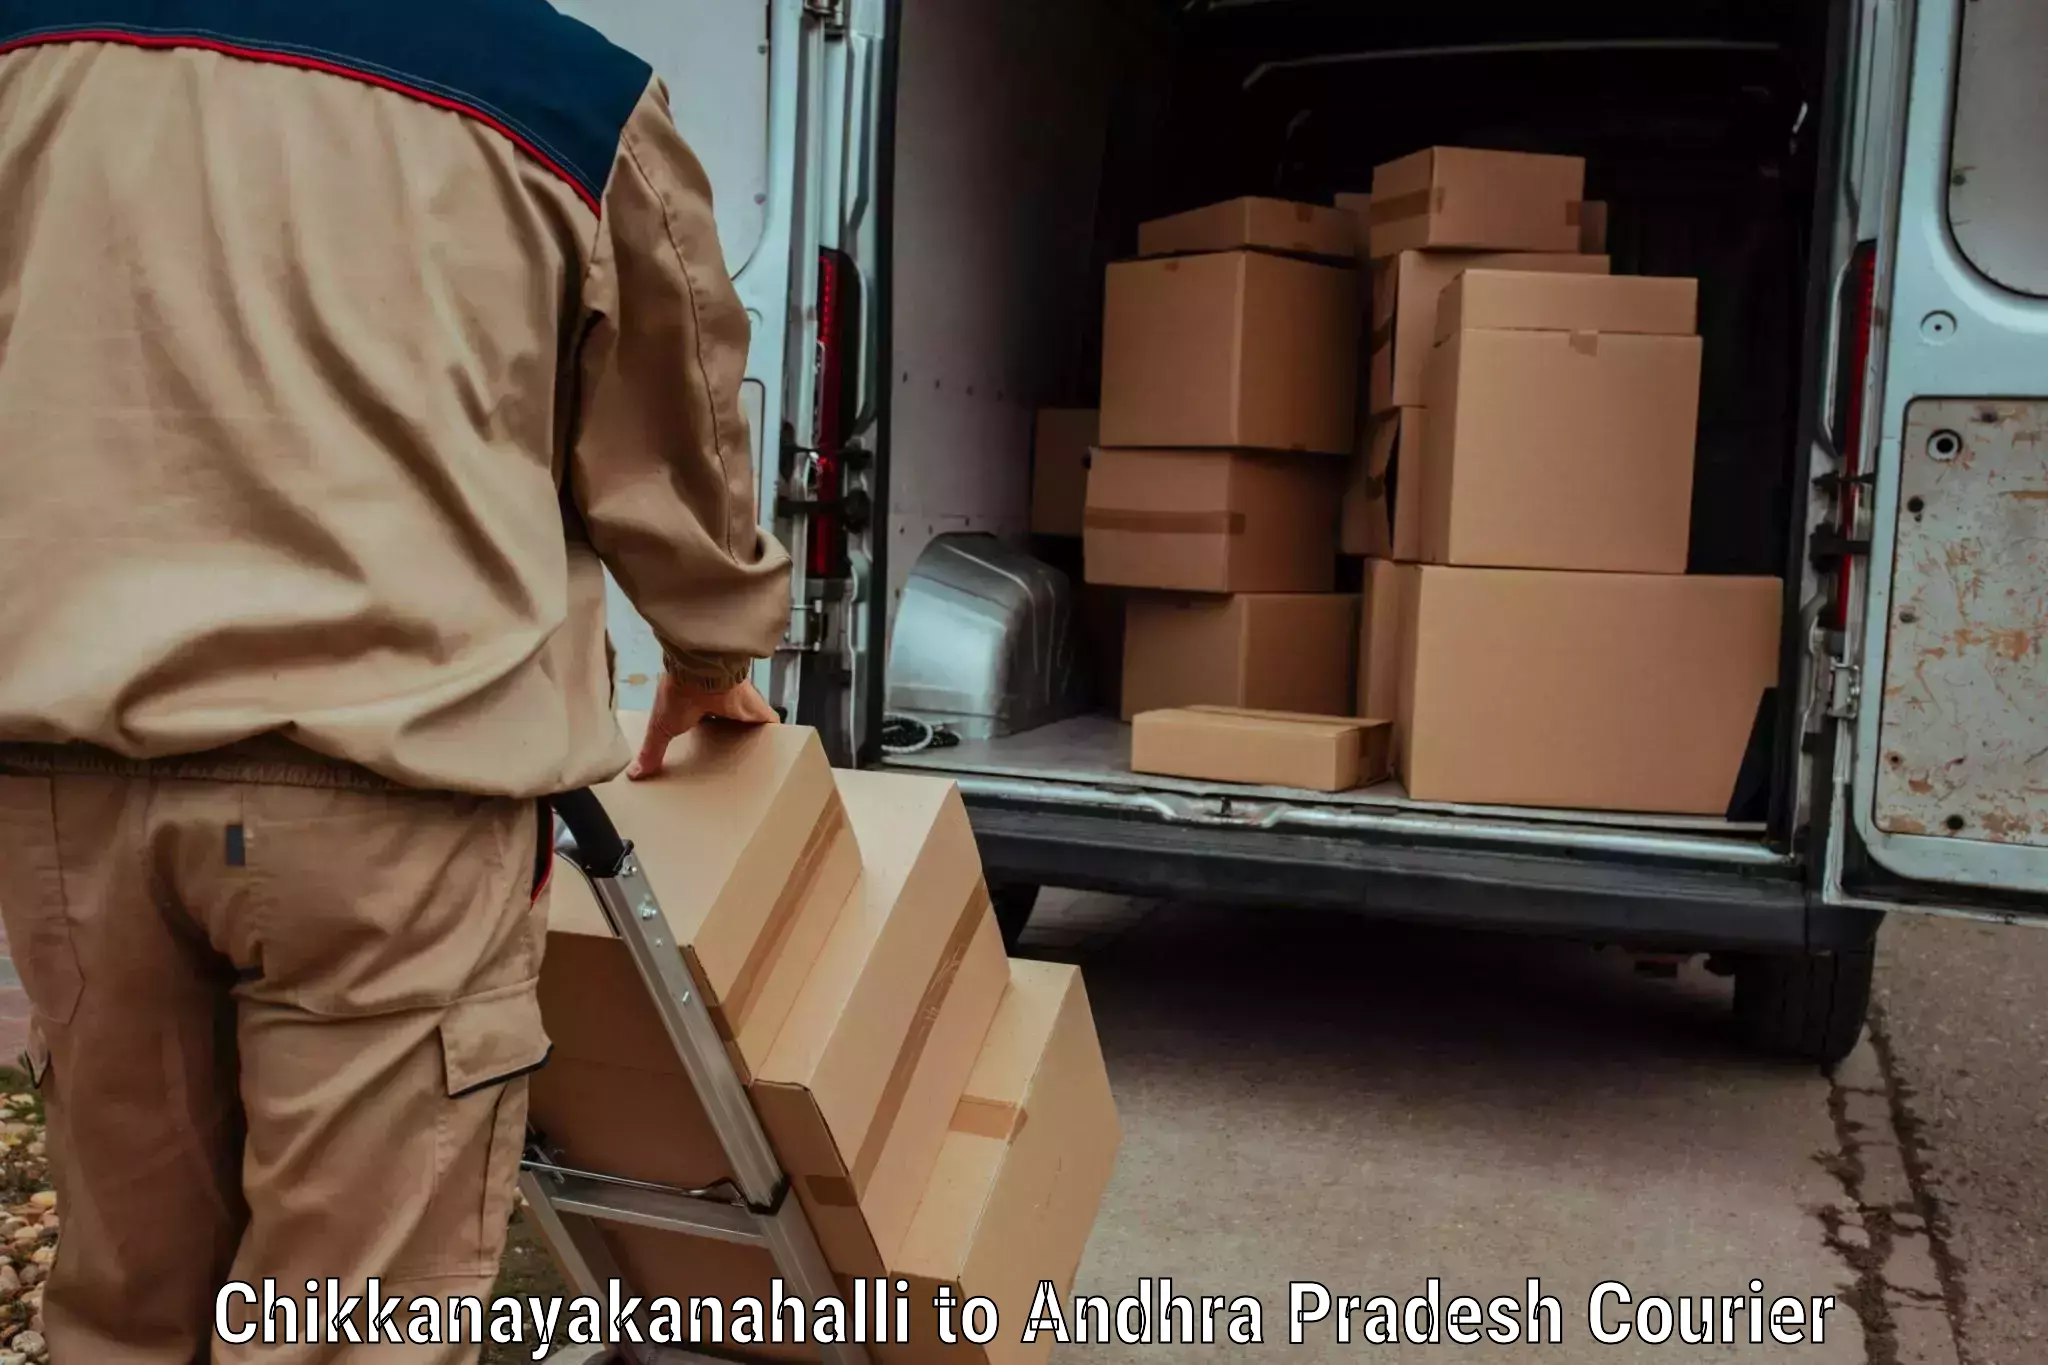 Courier service efficiency Chikkanayakanahalli to Addateegala